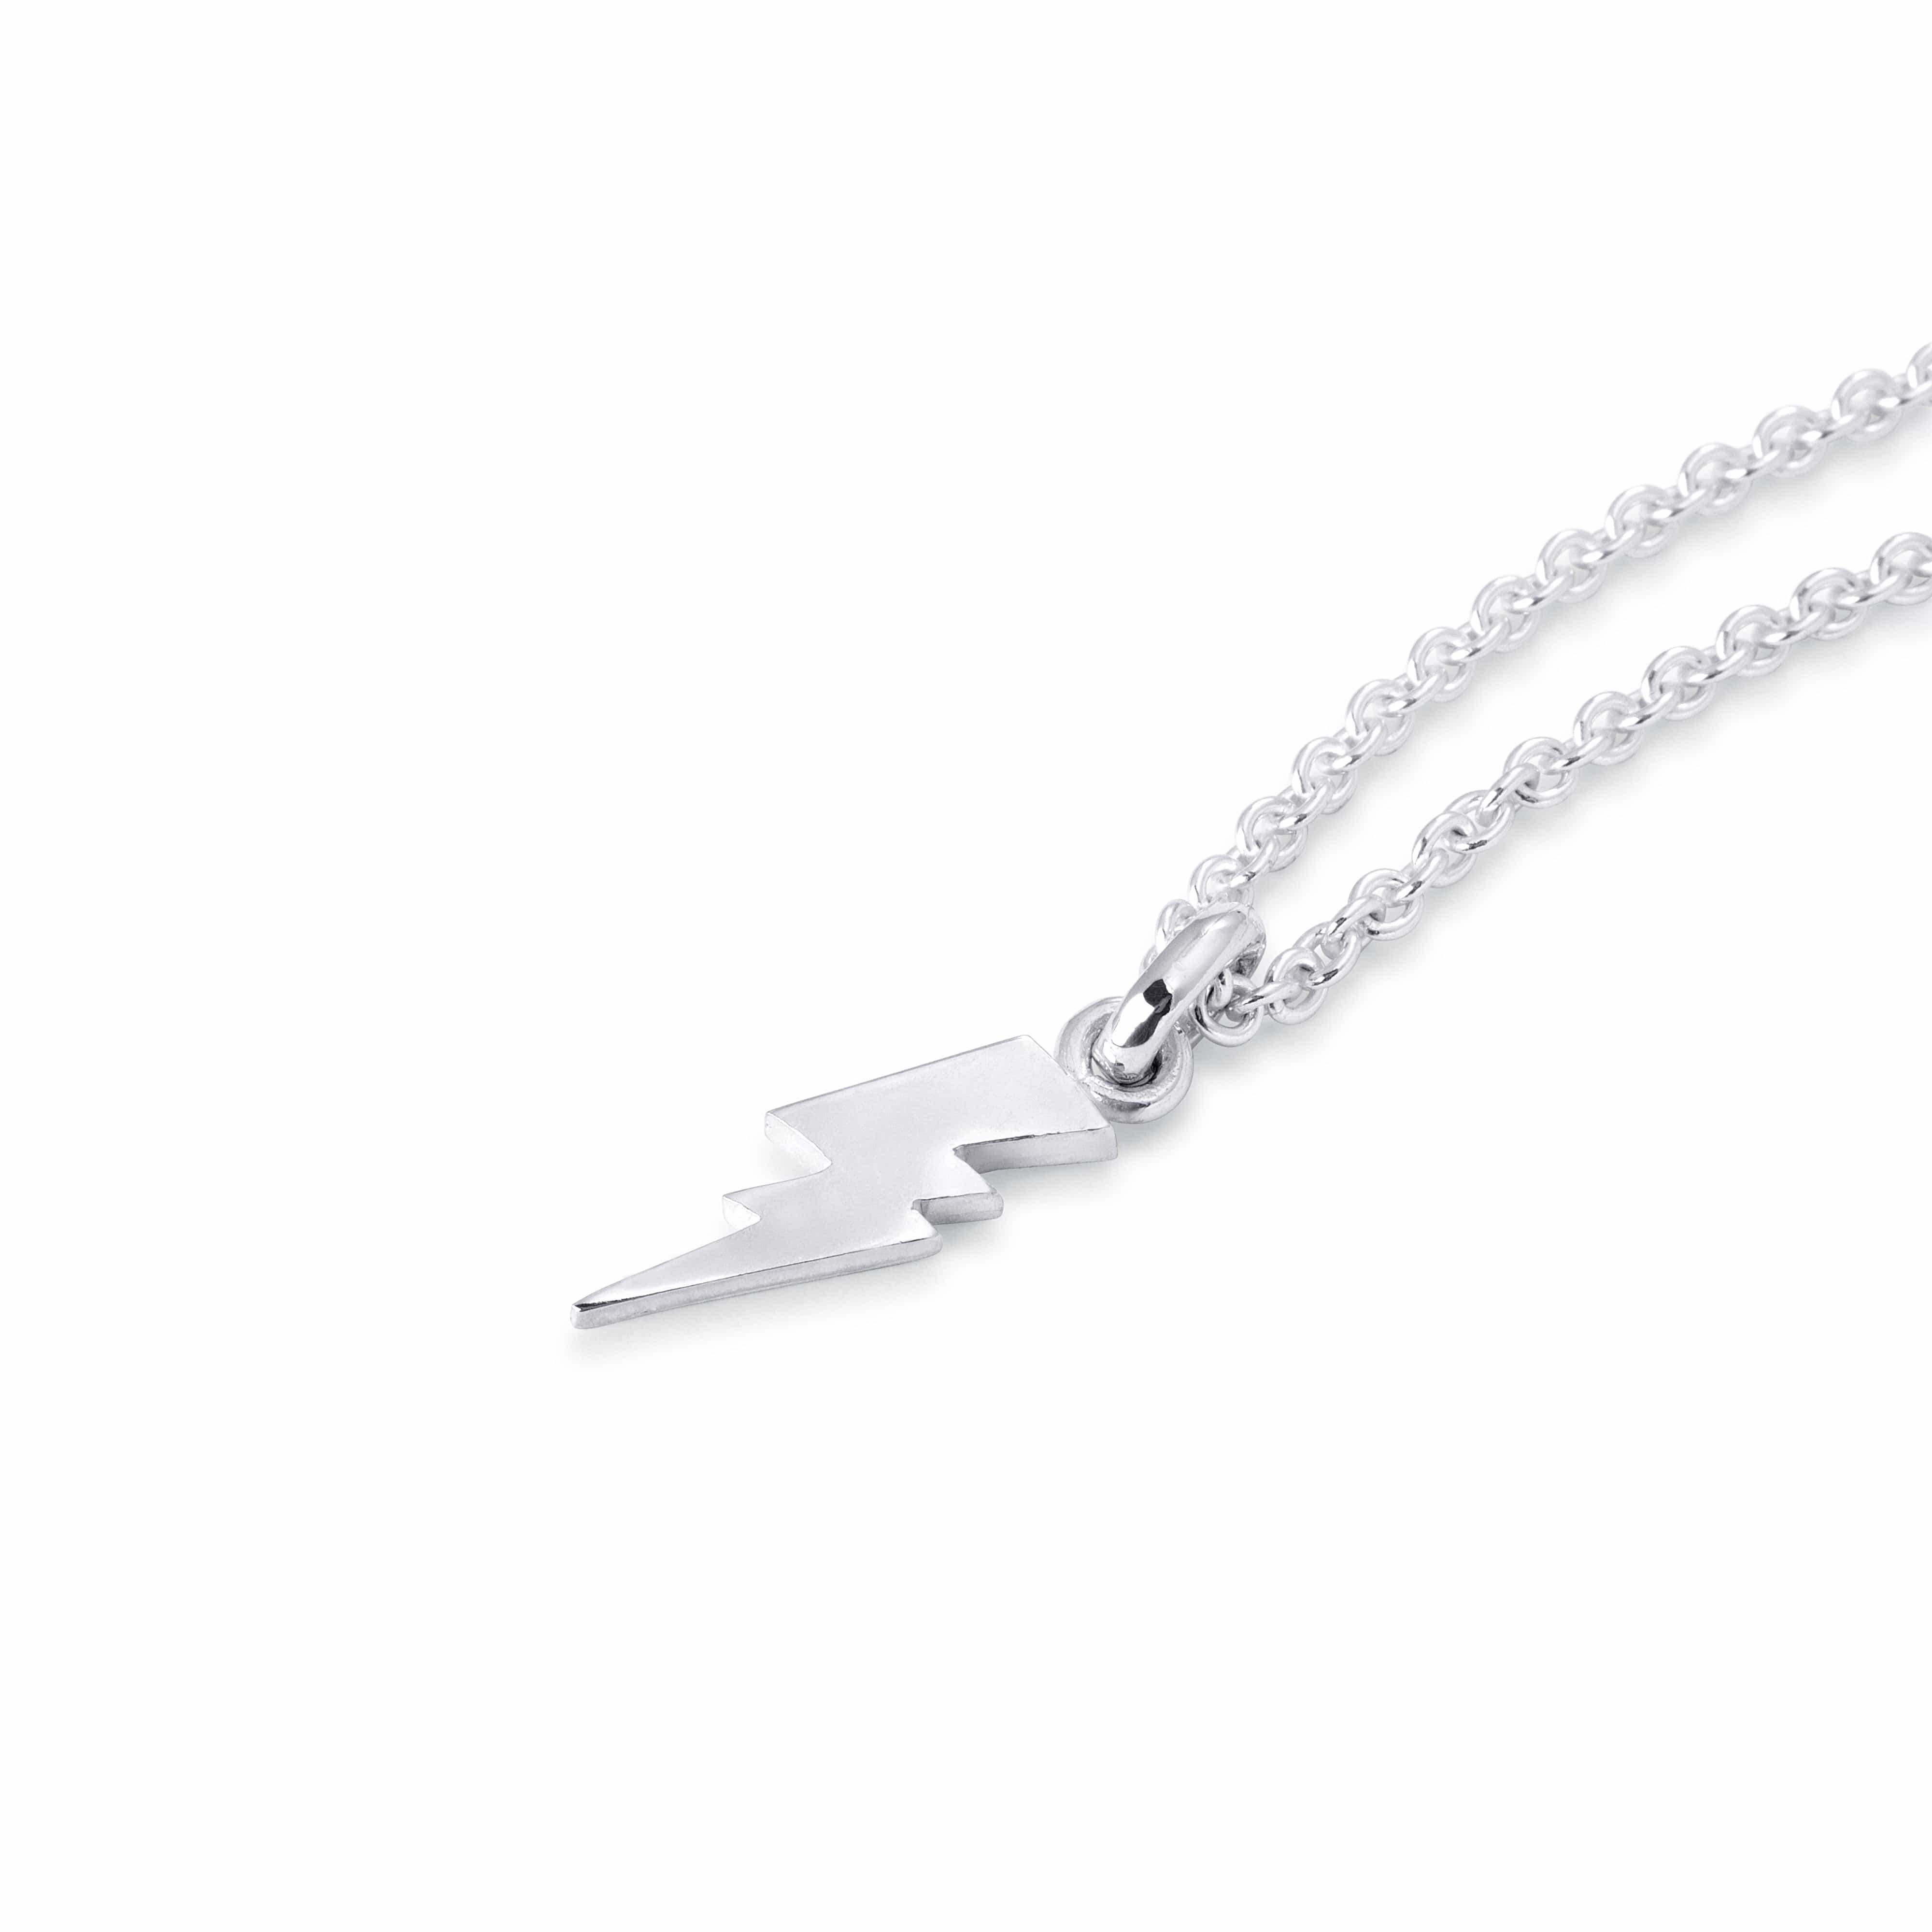 Buy Silver Lightning Bolt Necklace Boho Pendant, Dainty Chain, Lightning  Bolt Charm Online in India - Etsy